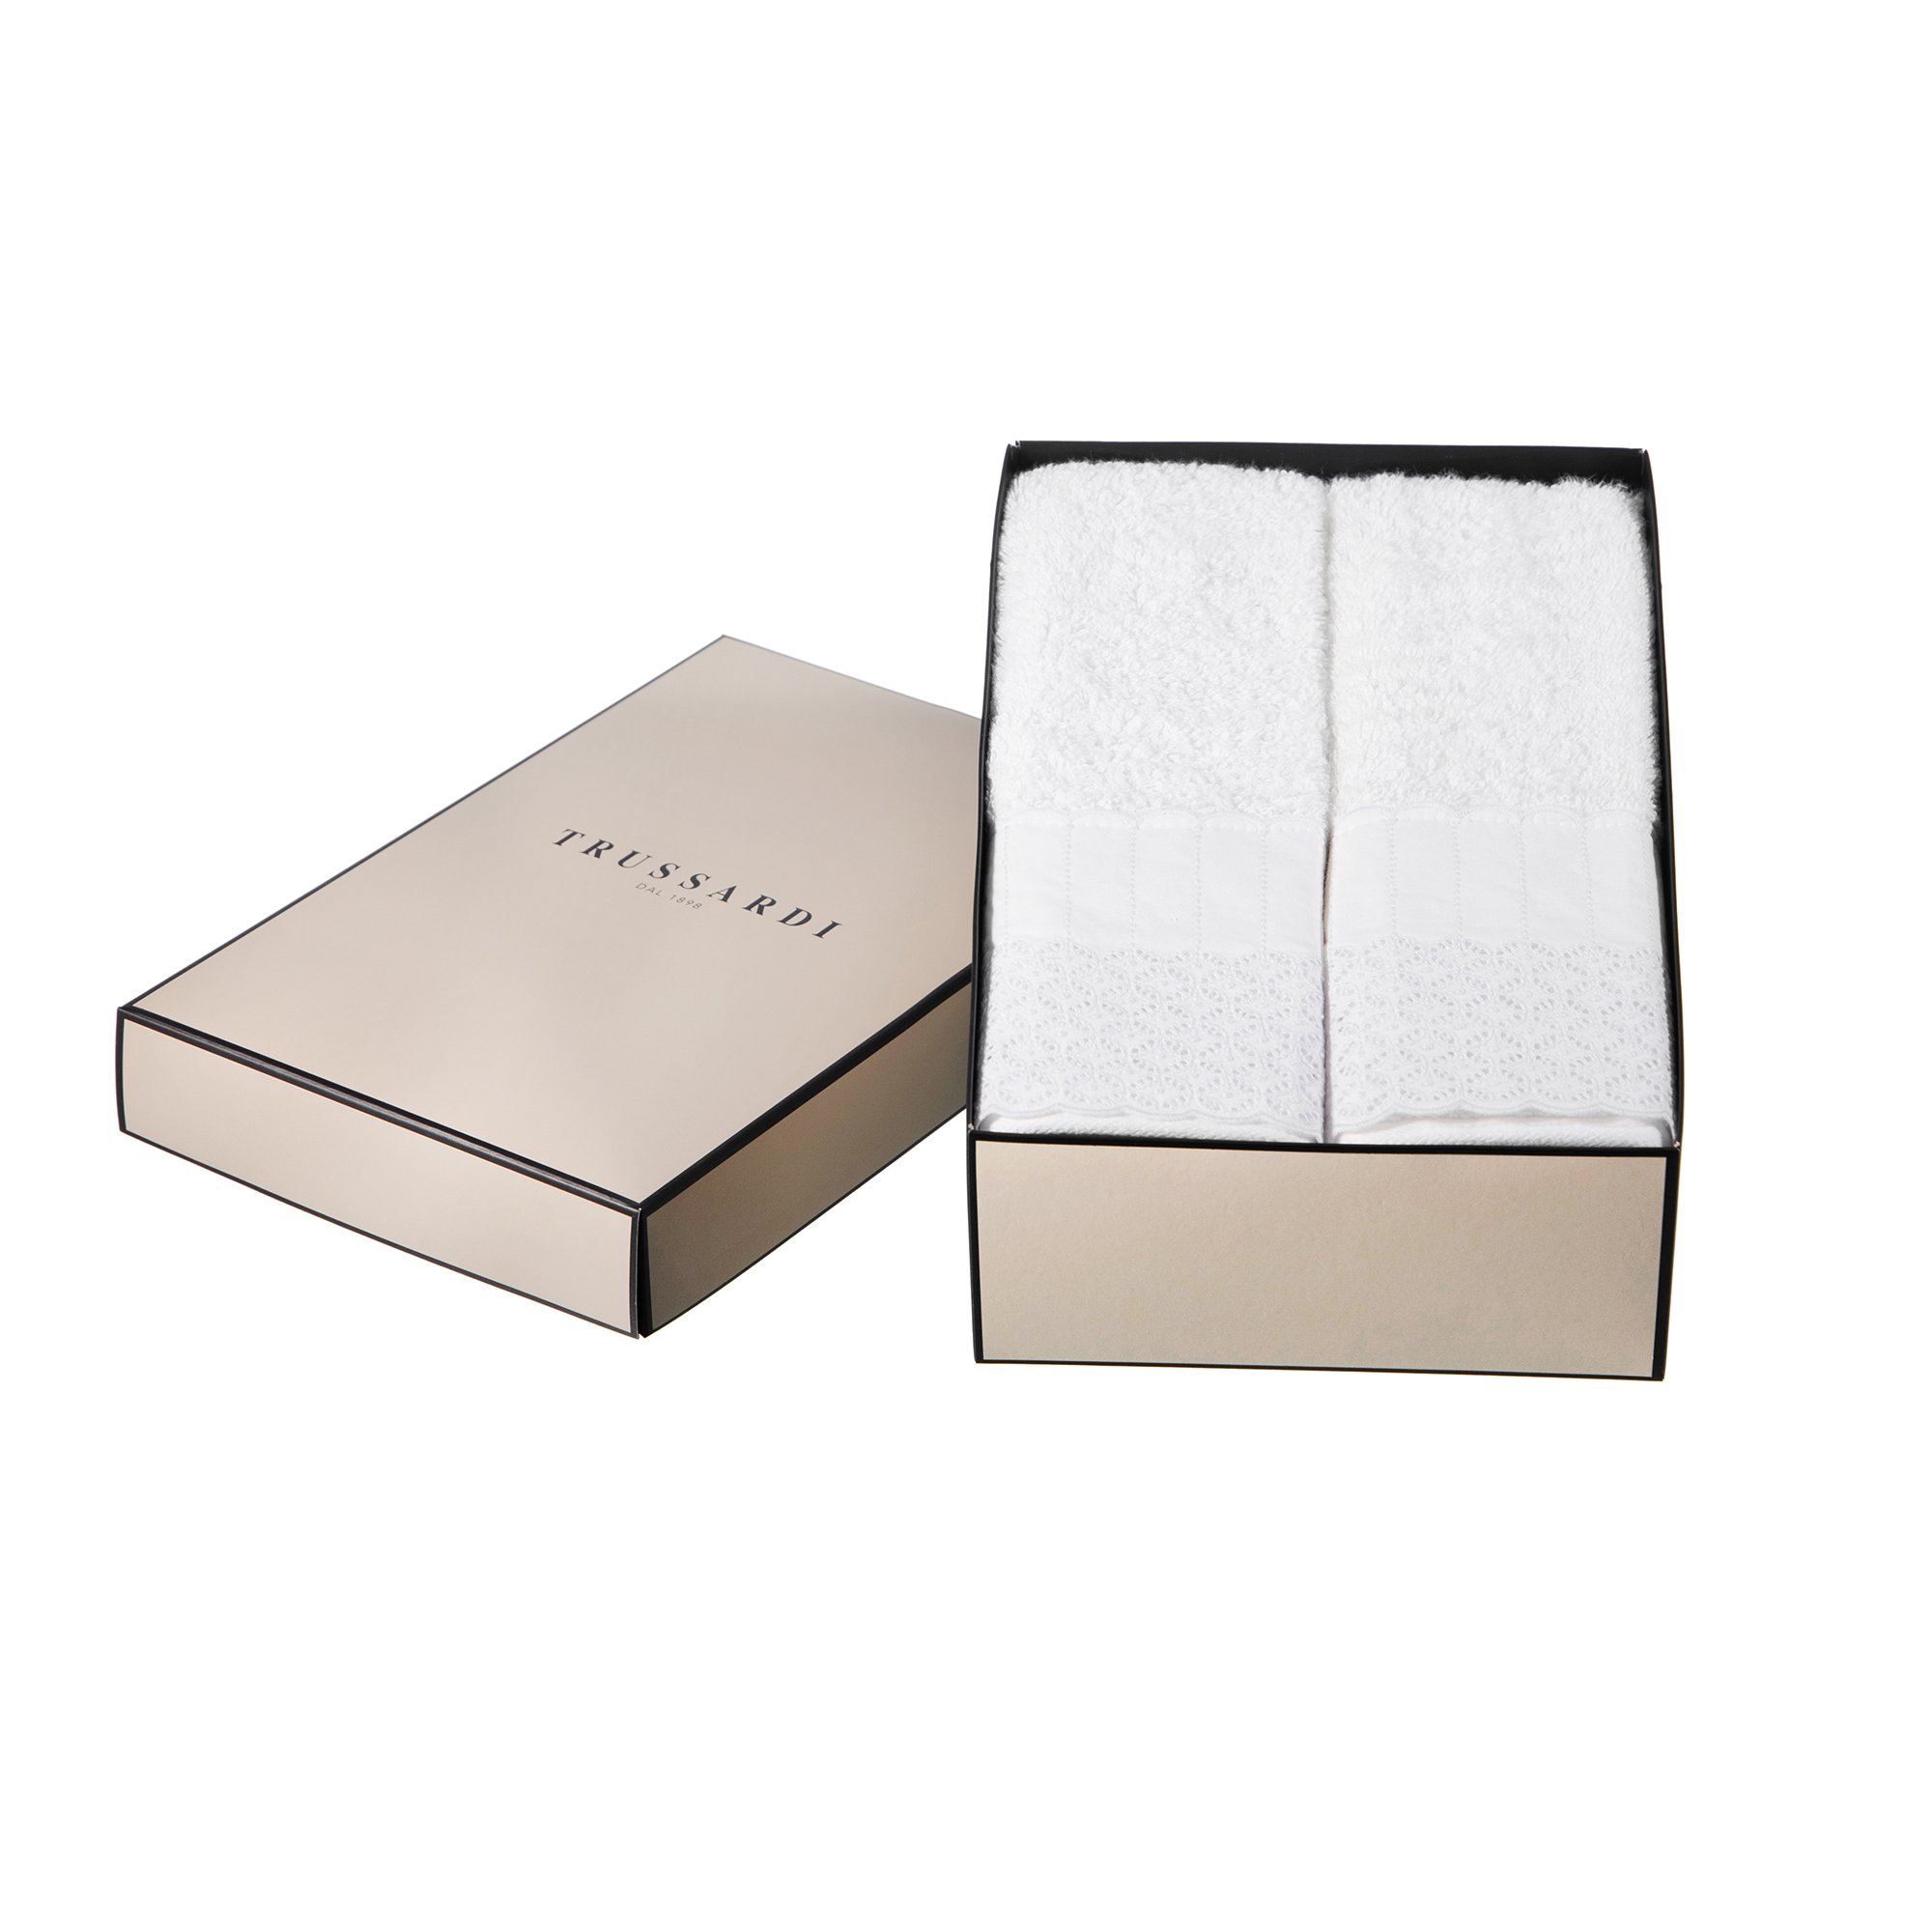 jogo de 2 toalhas de lavabo trussardi 100 algodao imperiale bordado c caixa de presente branco